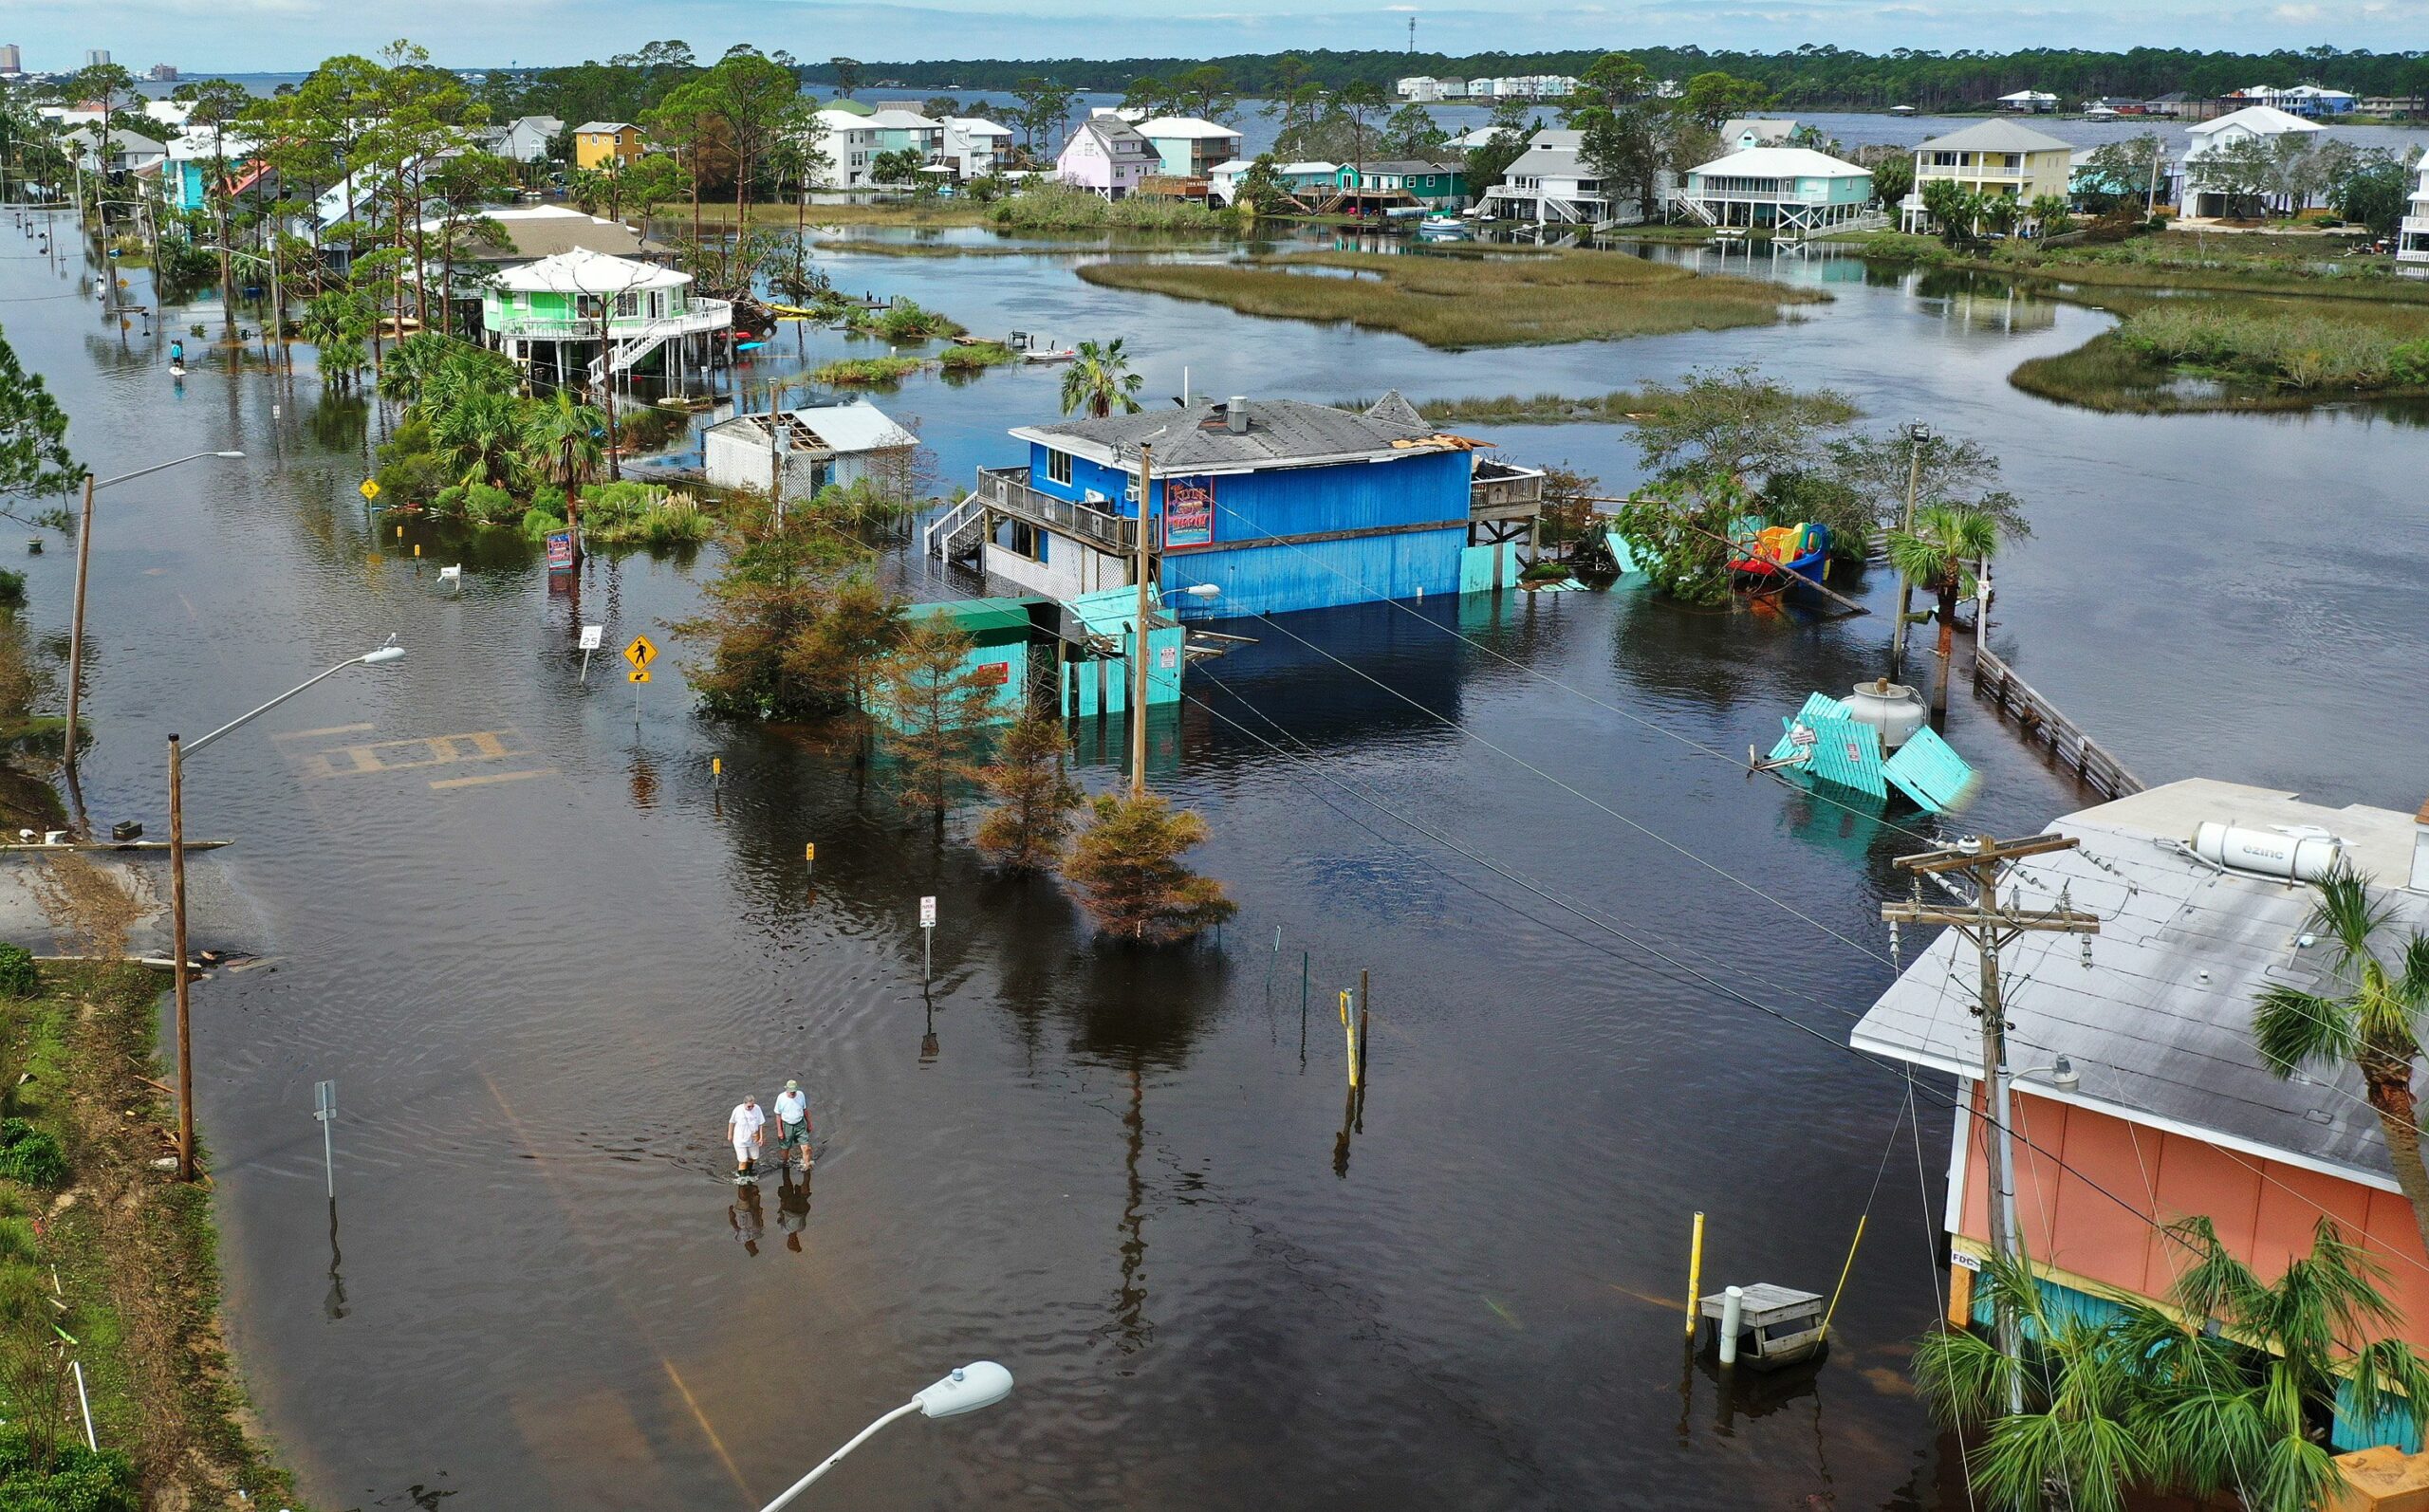 How much damage did Hurricane Sally do to Gulf Shores Alabama?